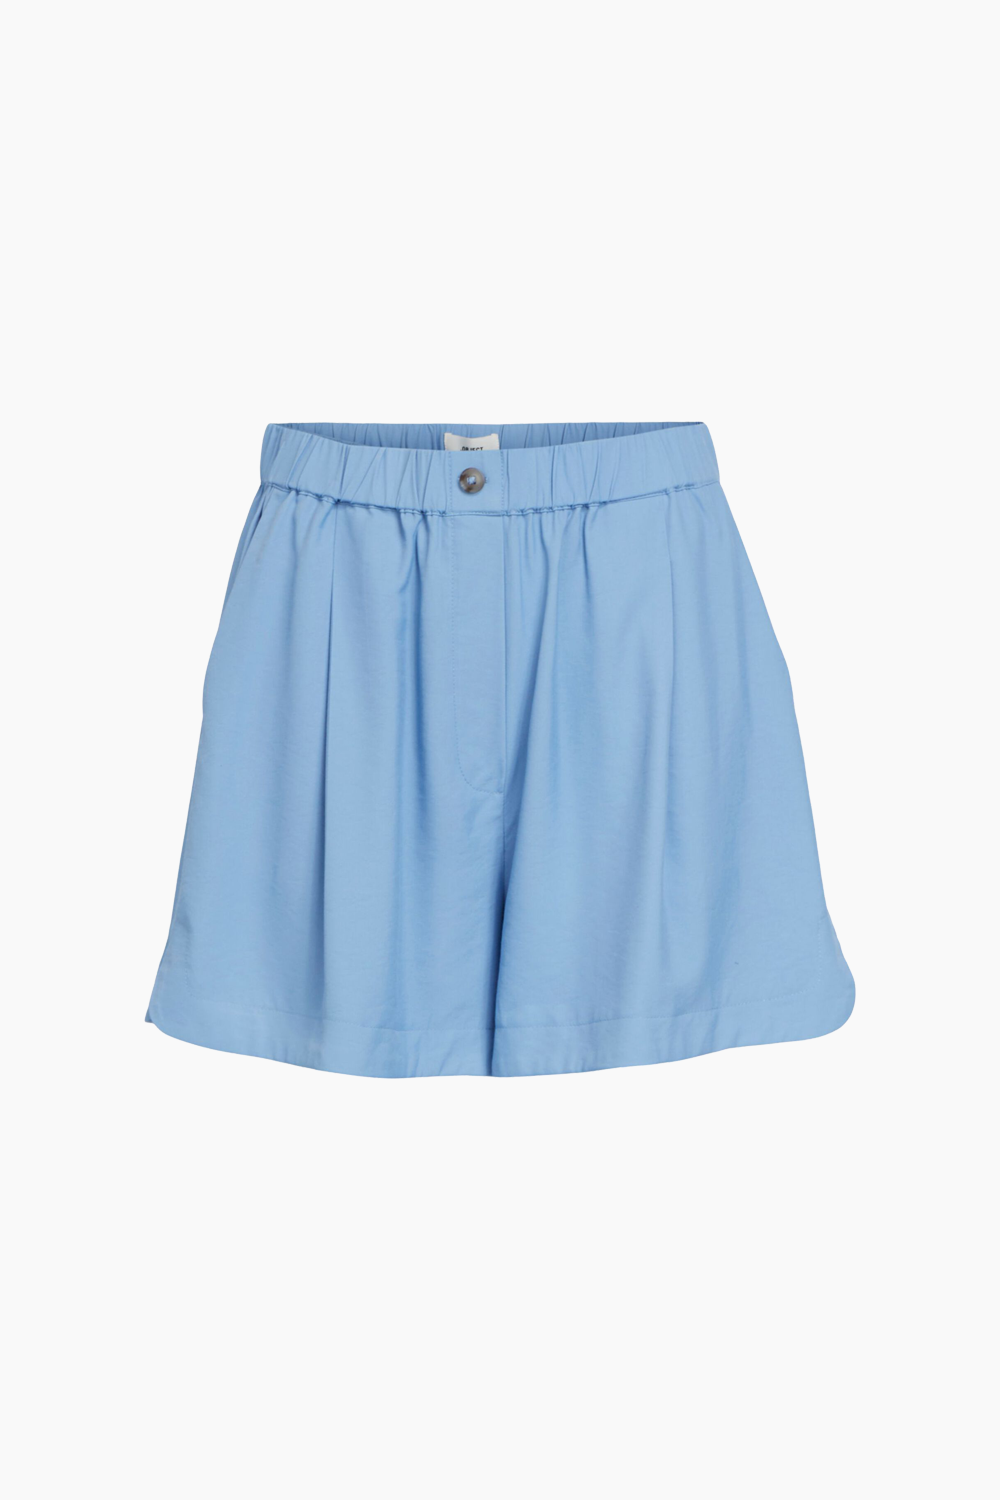 4: Objlagan HW Shorts - Provence - Object - Blå S